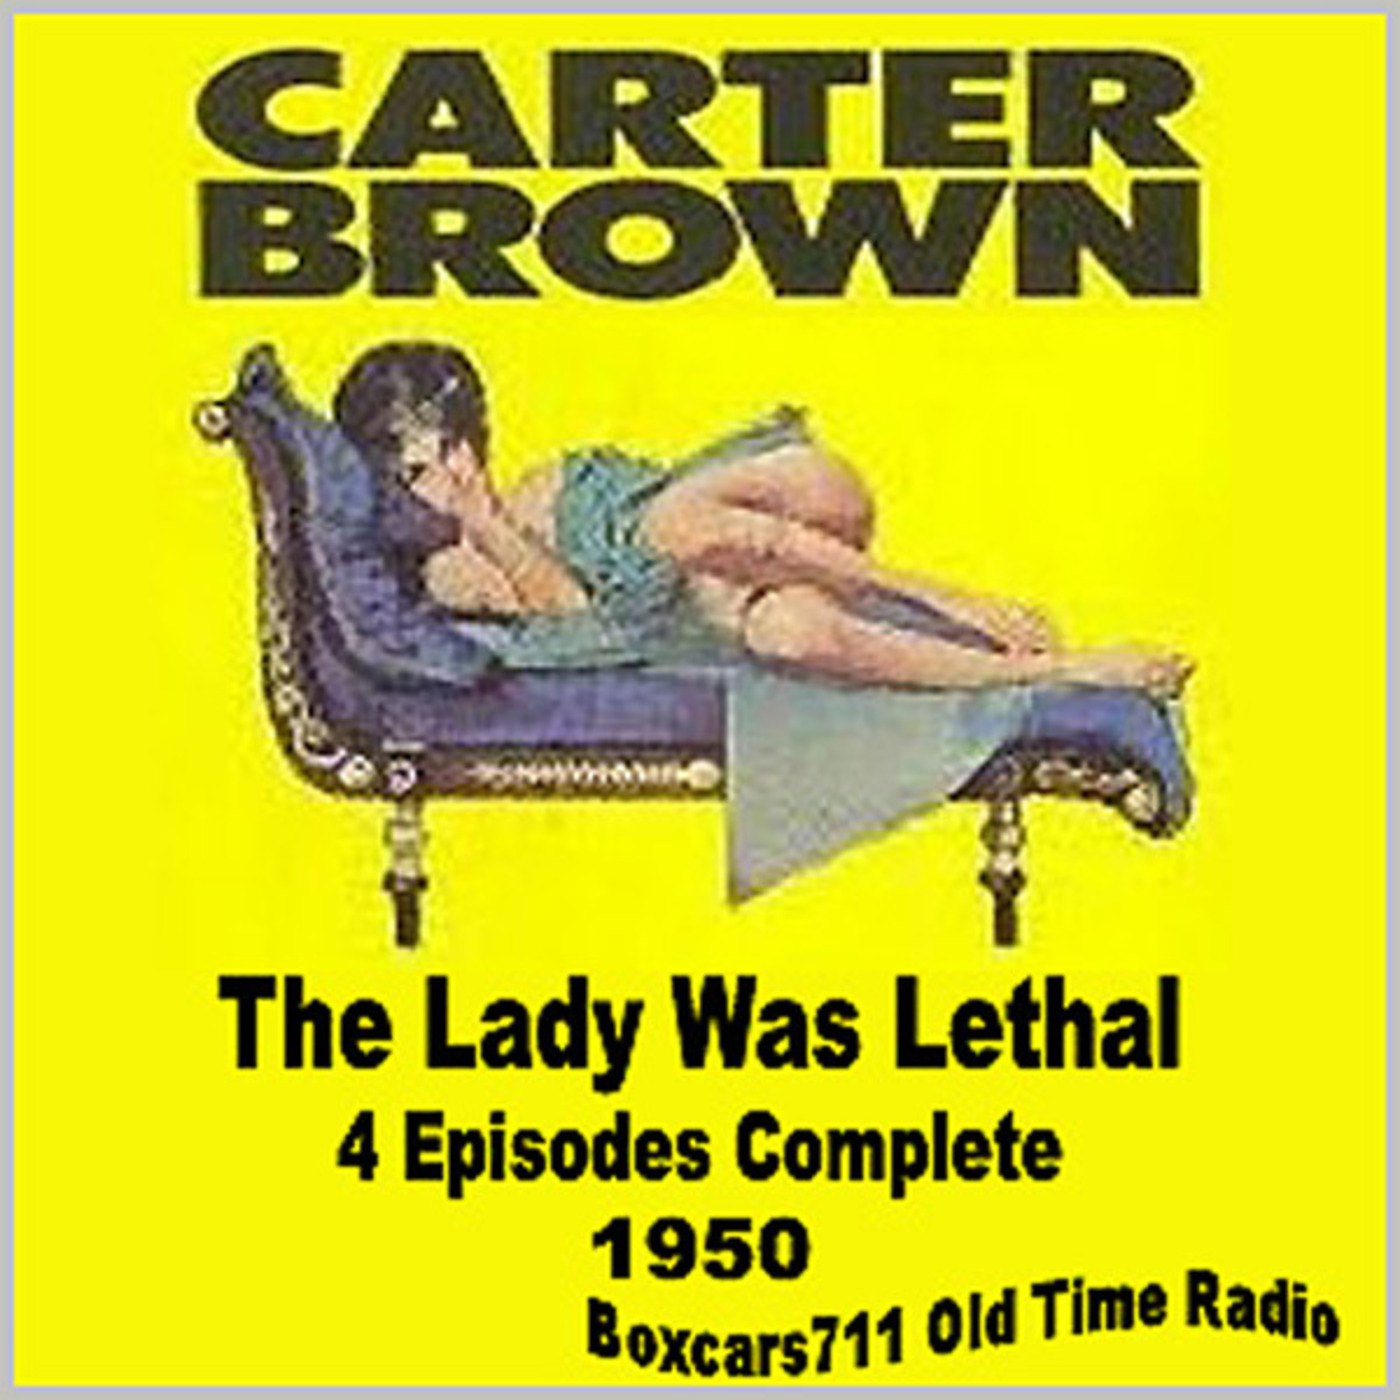 Episode 9608: Carter Brown Mysteries - 